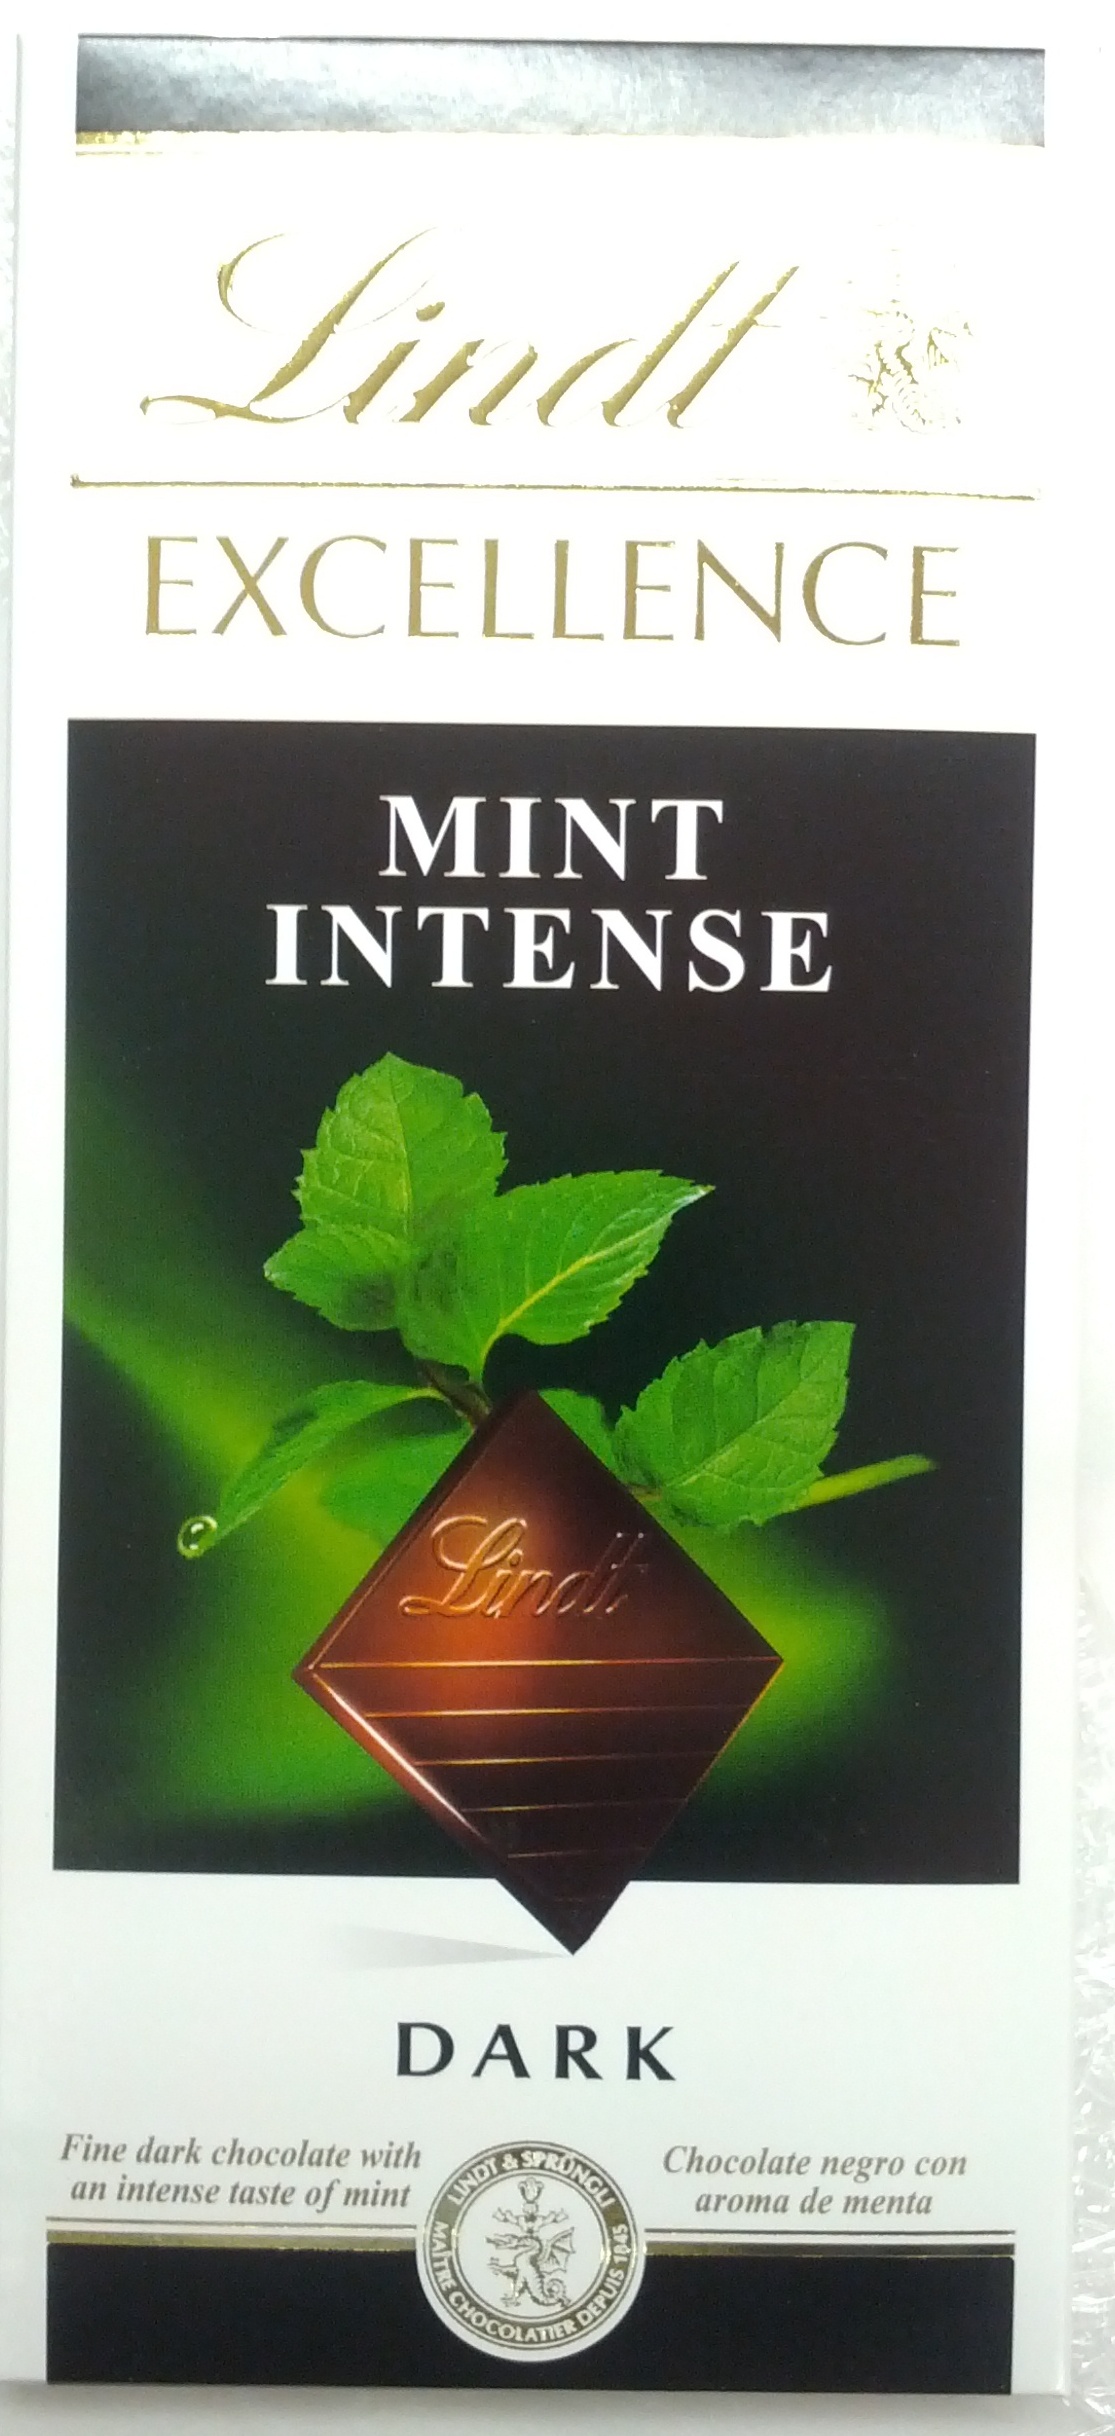 Excellence Mint Intense Dark - Tuote - en